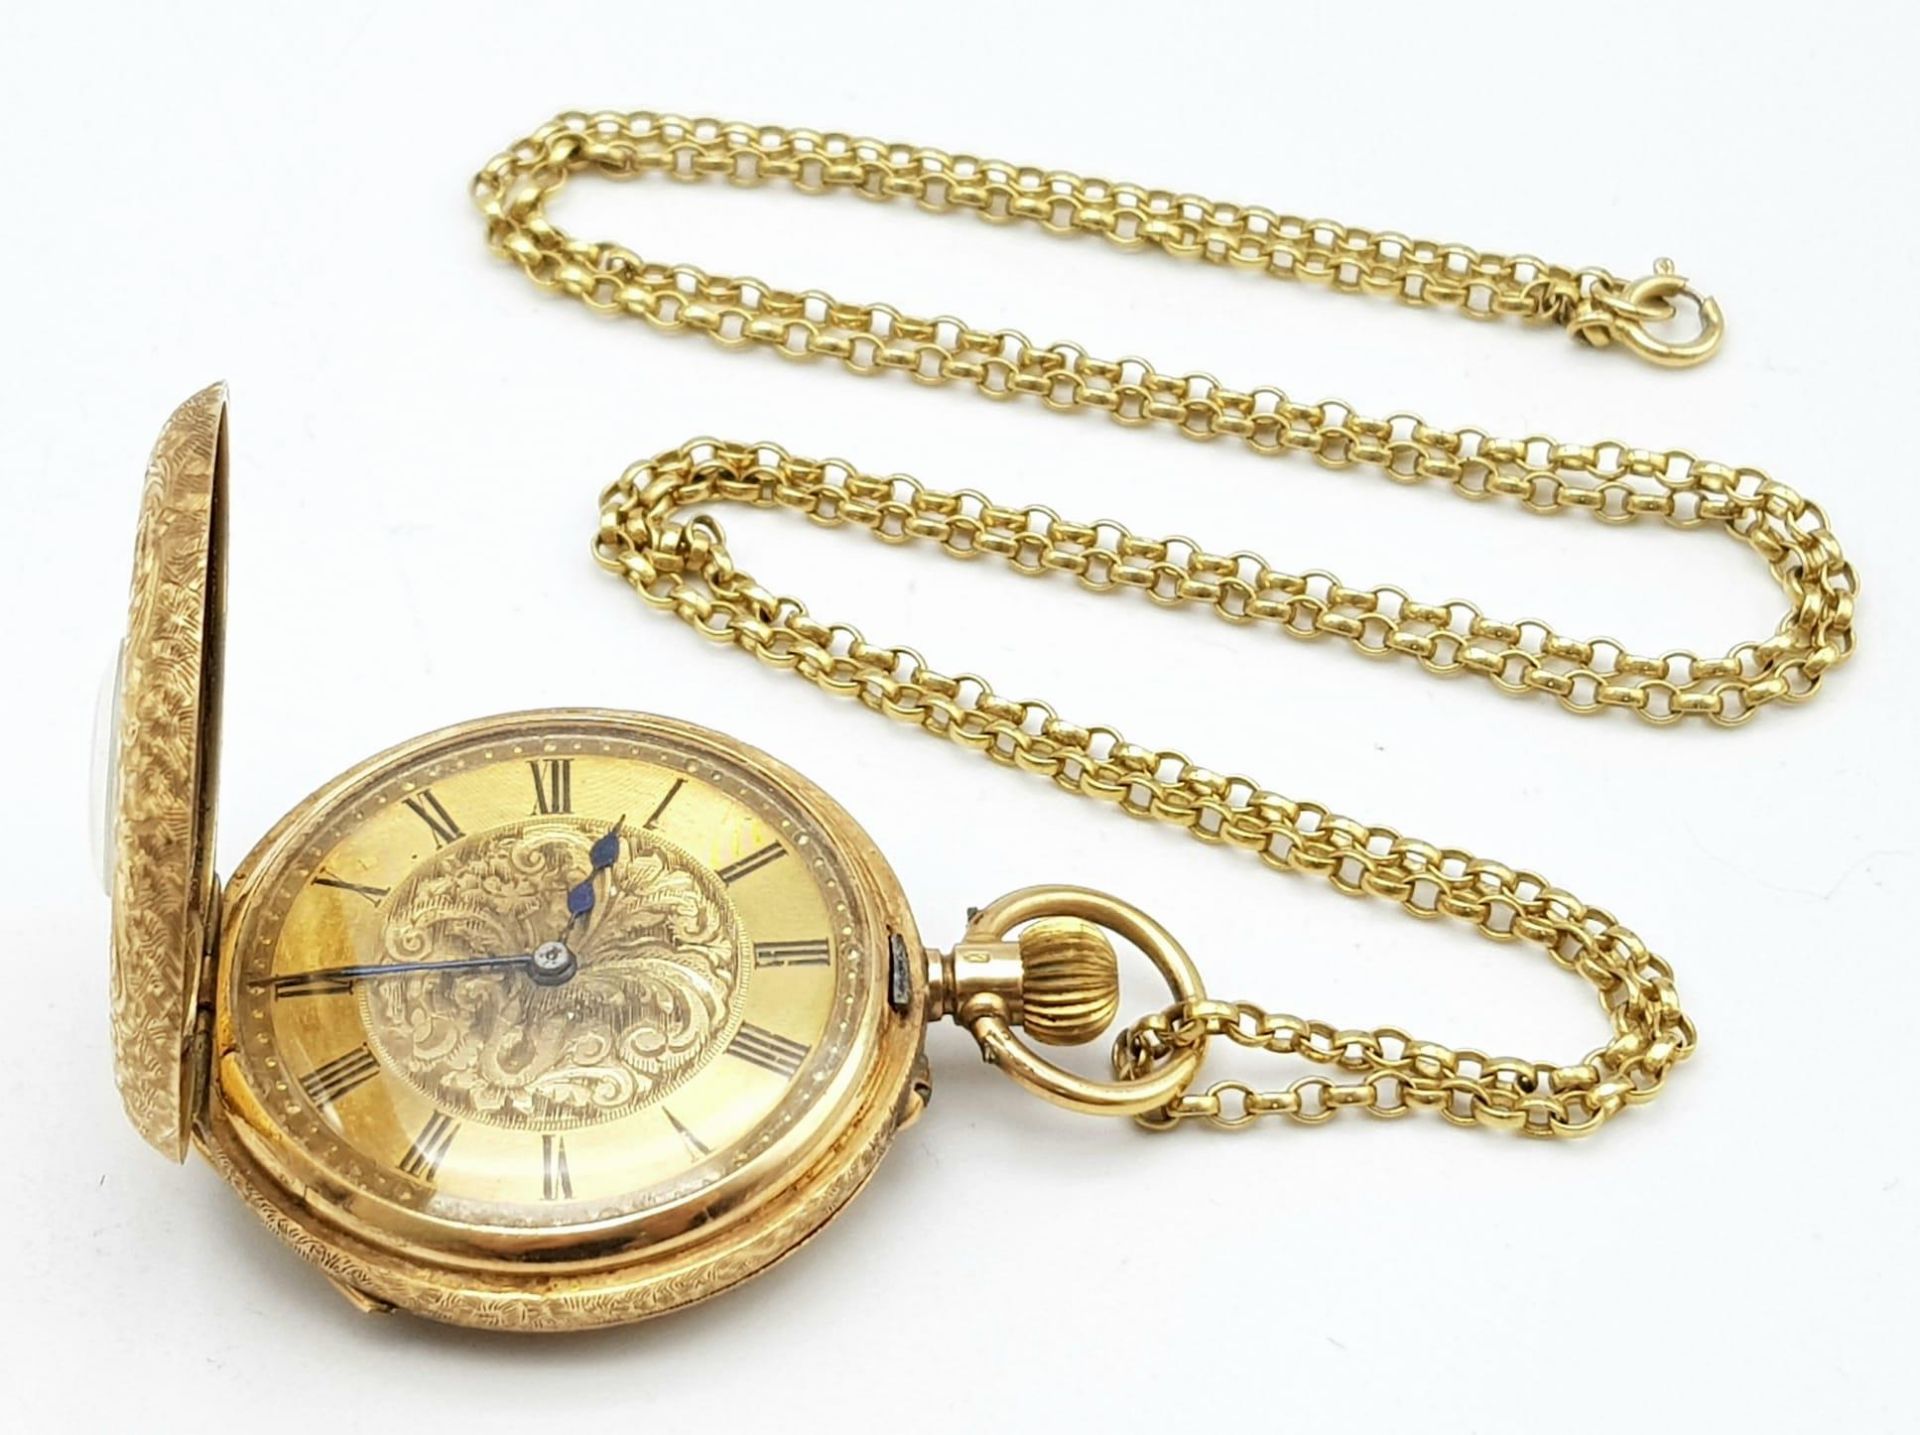 A beautiful 14 K yellow gold half hunter/pendant watch, heavily engraved on a long (64 cm) 9 k